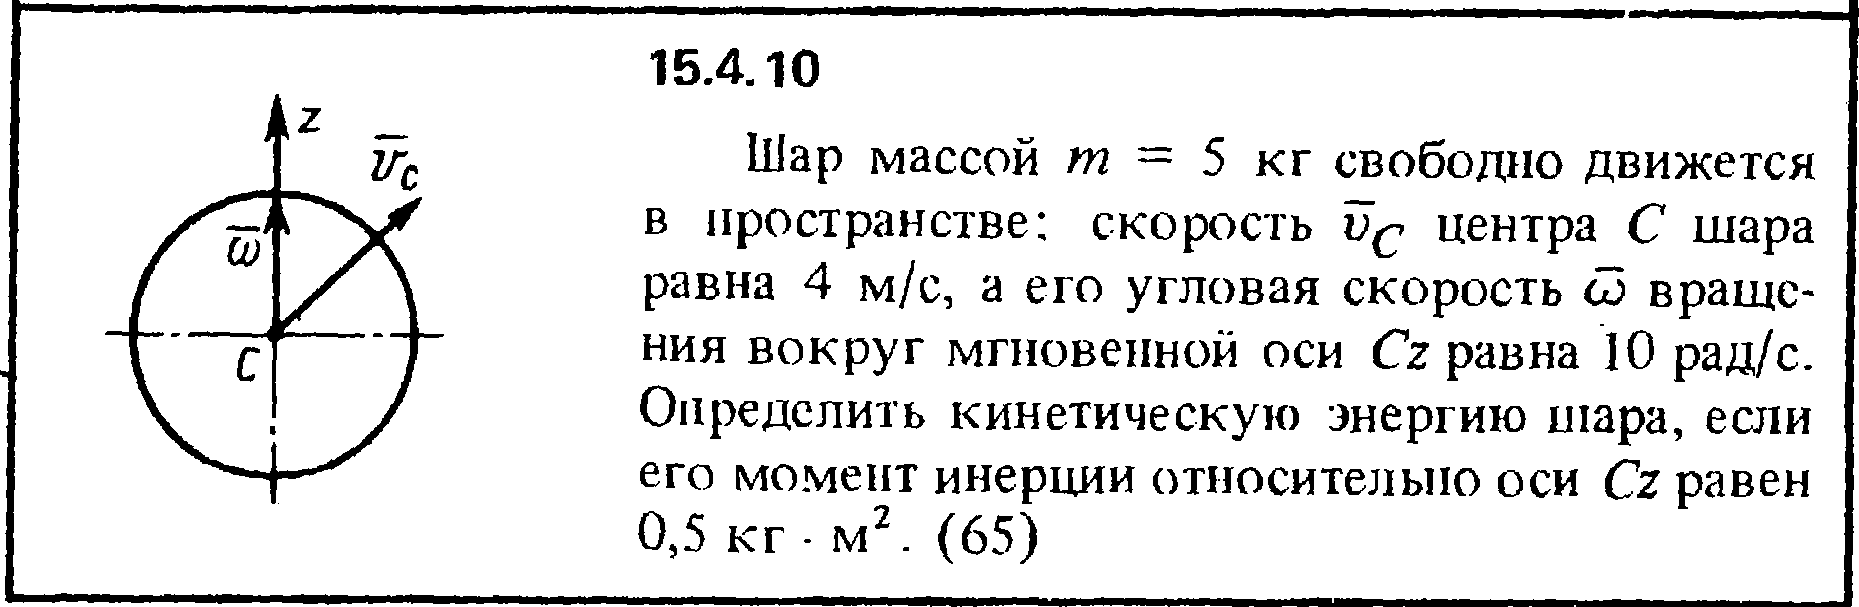 Решение задачи 15.4.10 из сборника Кепе О.Е. 1989 года